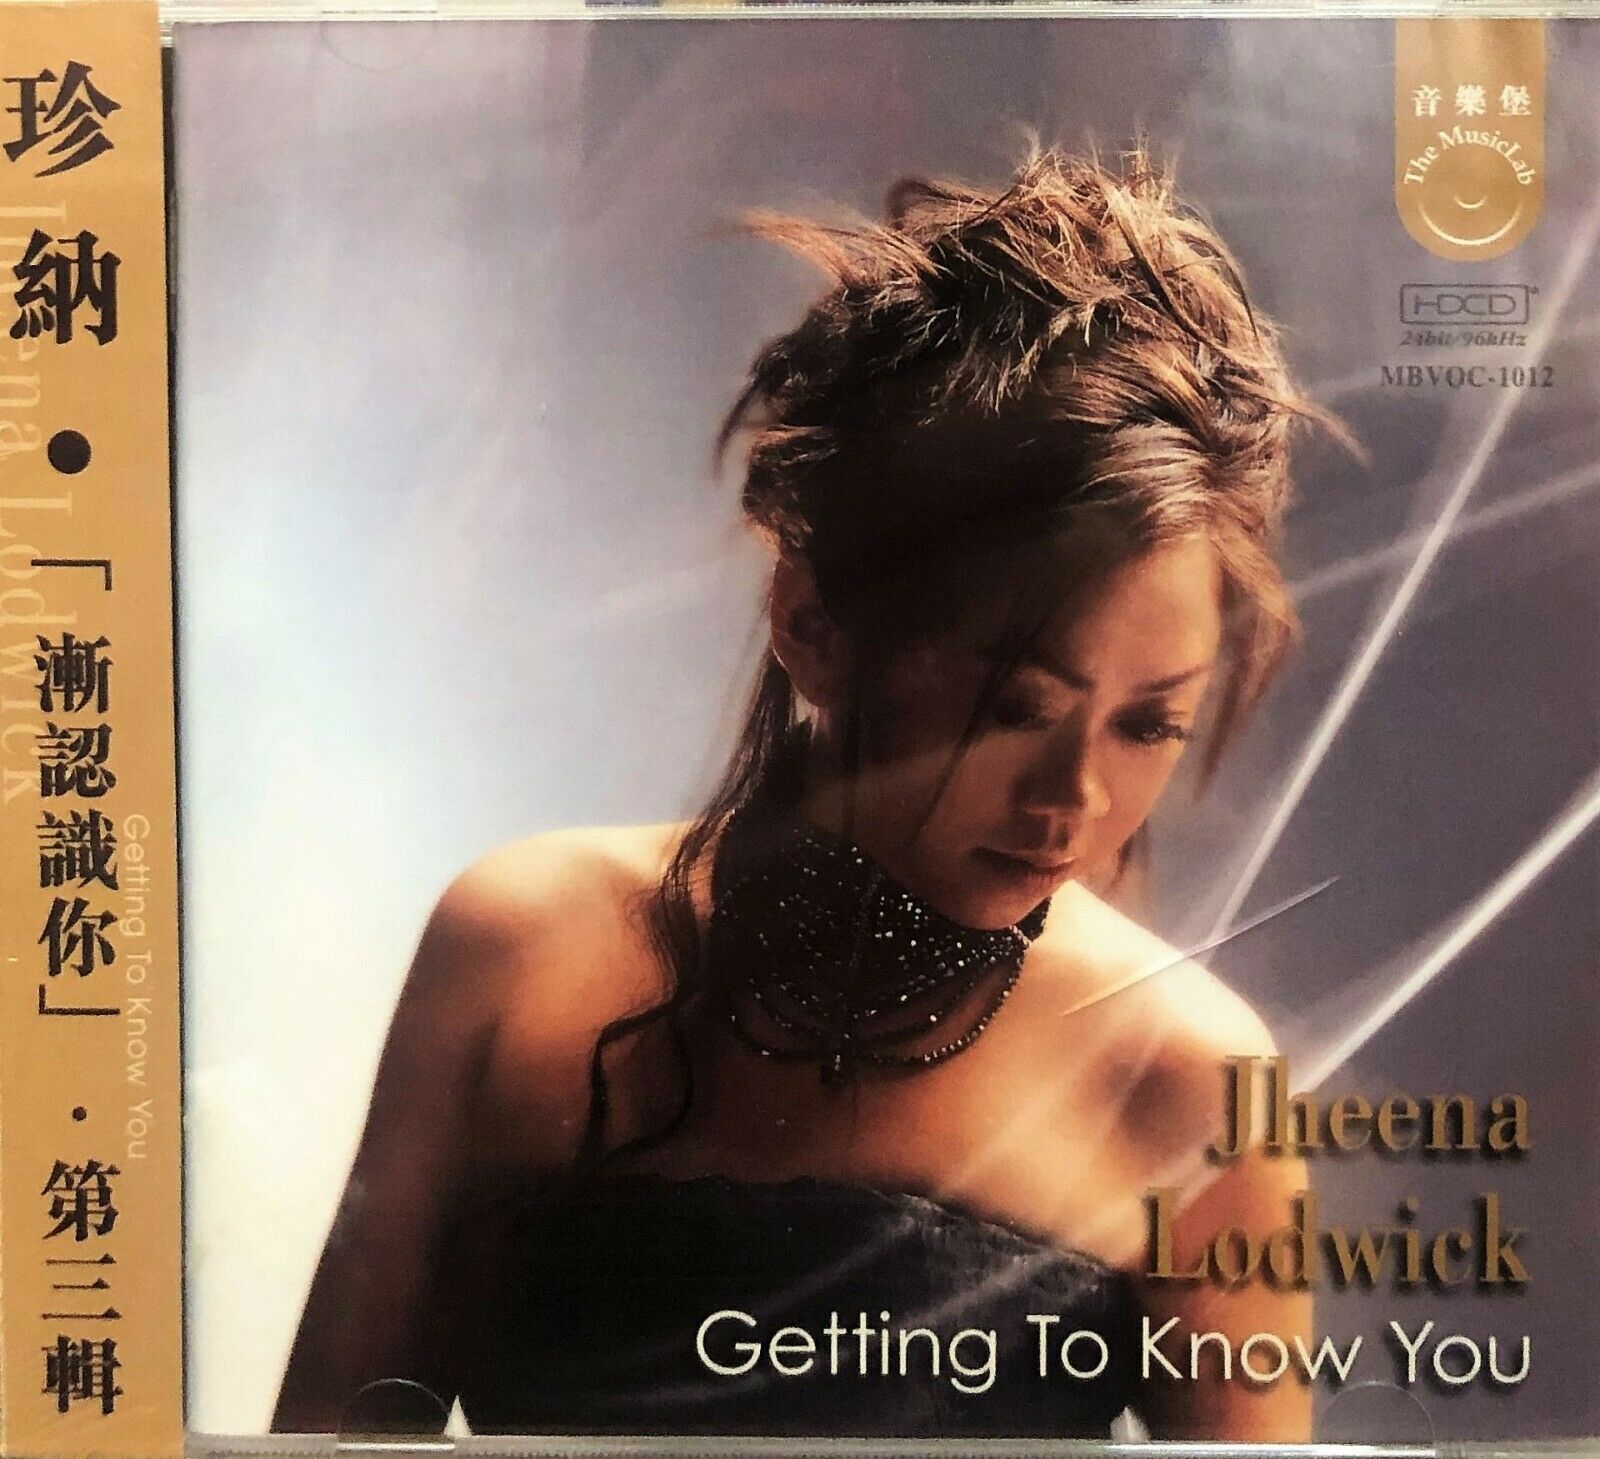 JHEENA LODWICK - GETTING TO KNOW YOU 2002 (CD)